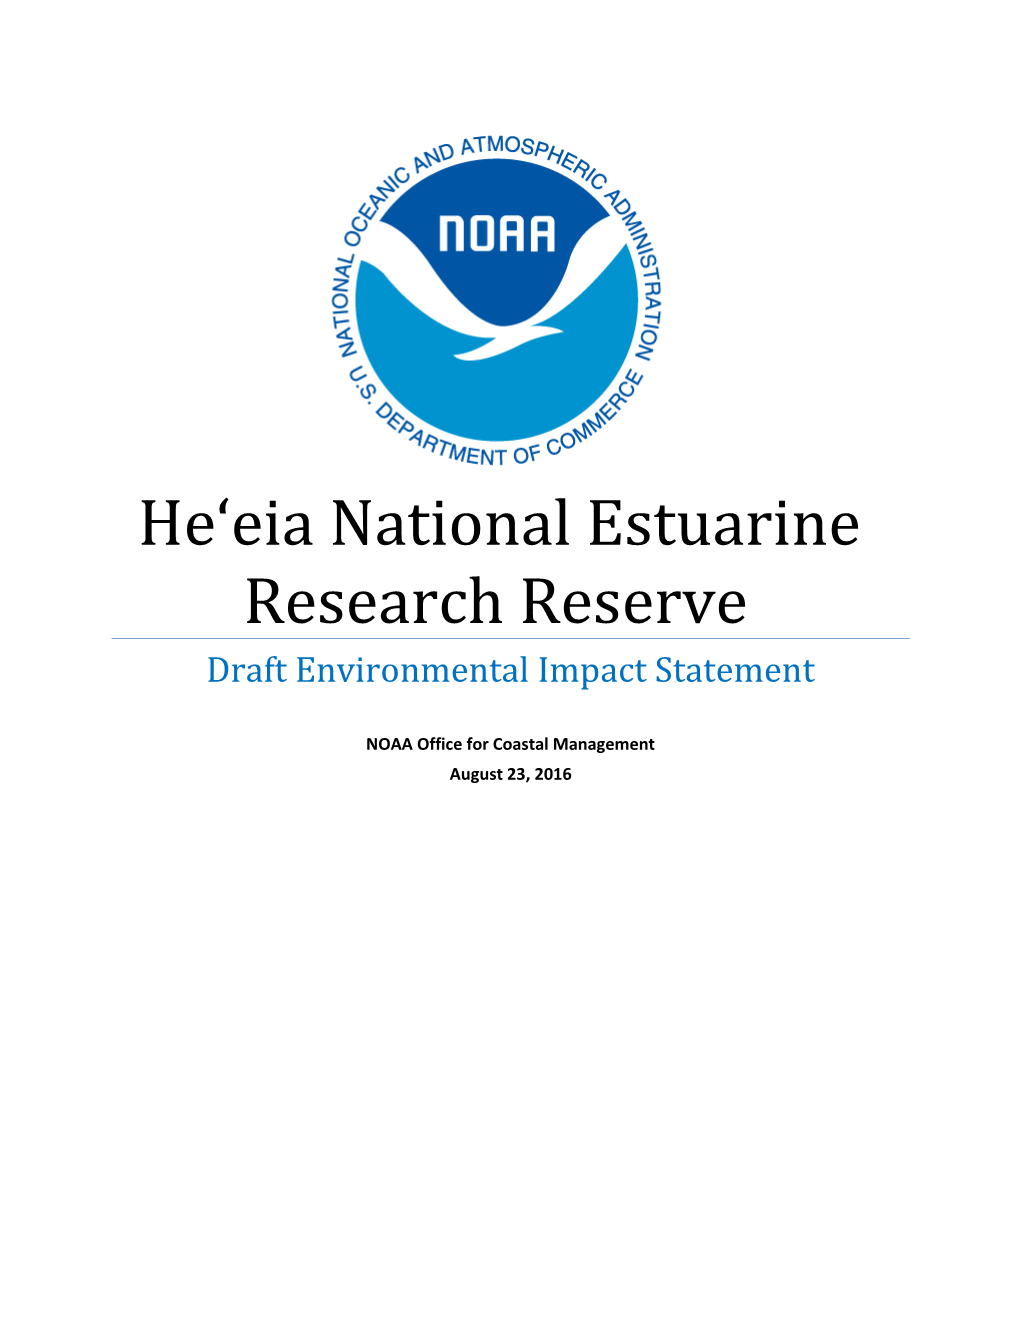 He'eia National Estuarine Research Reserve Draft Environmental